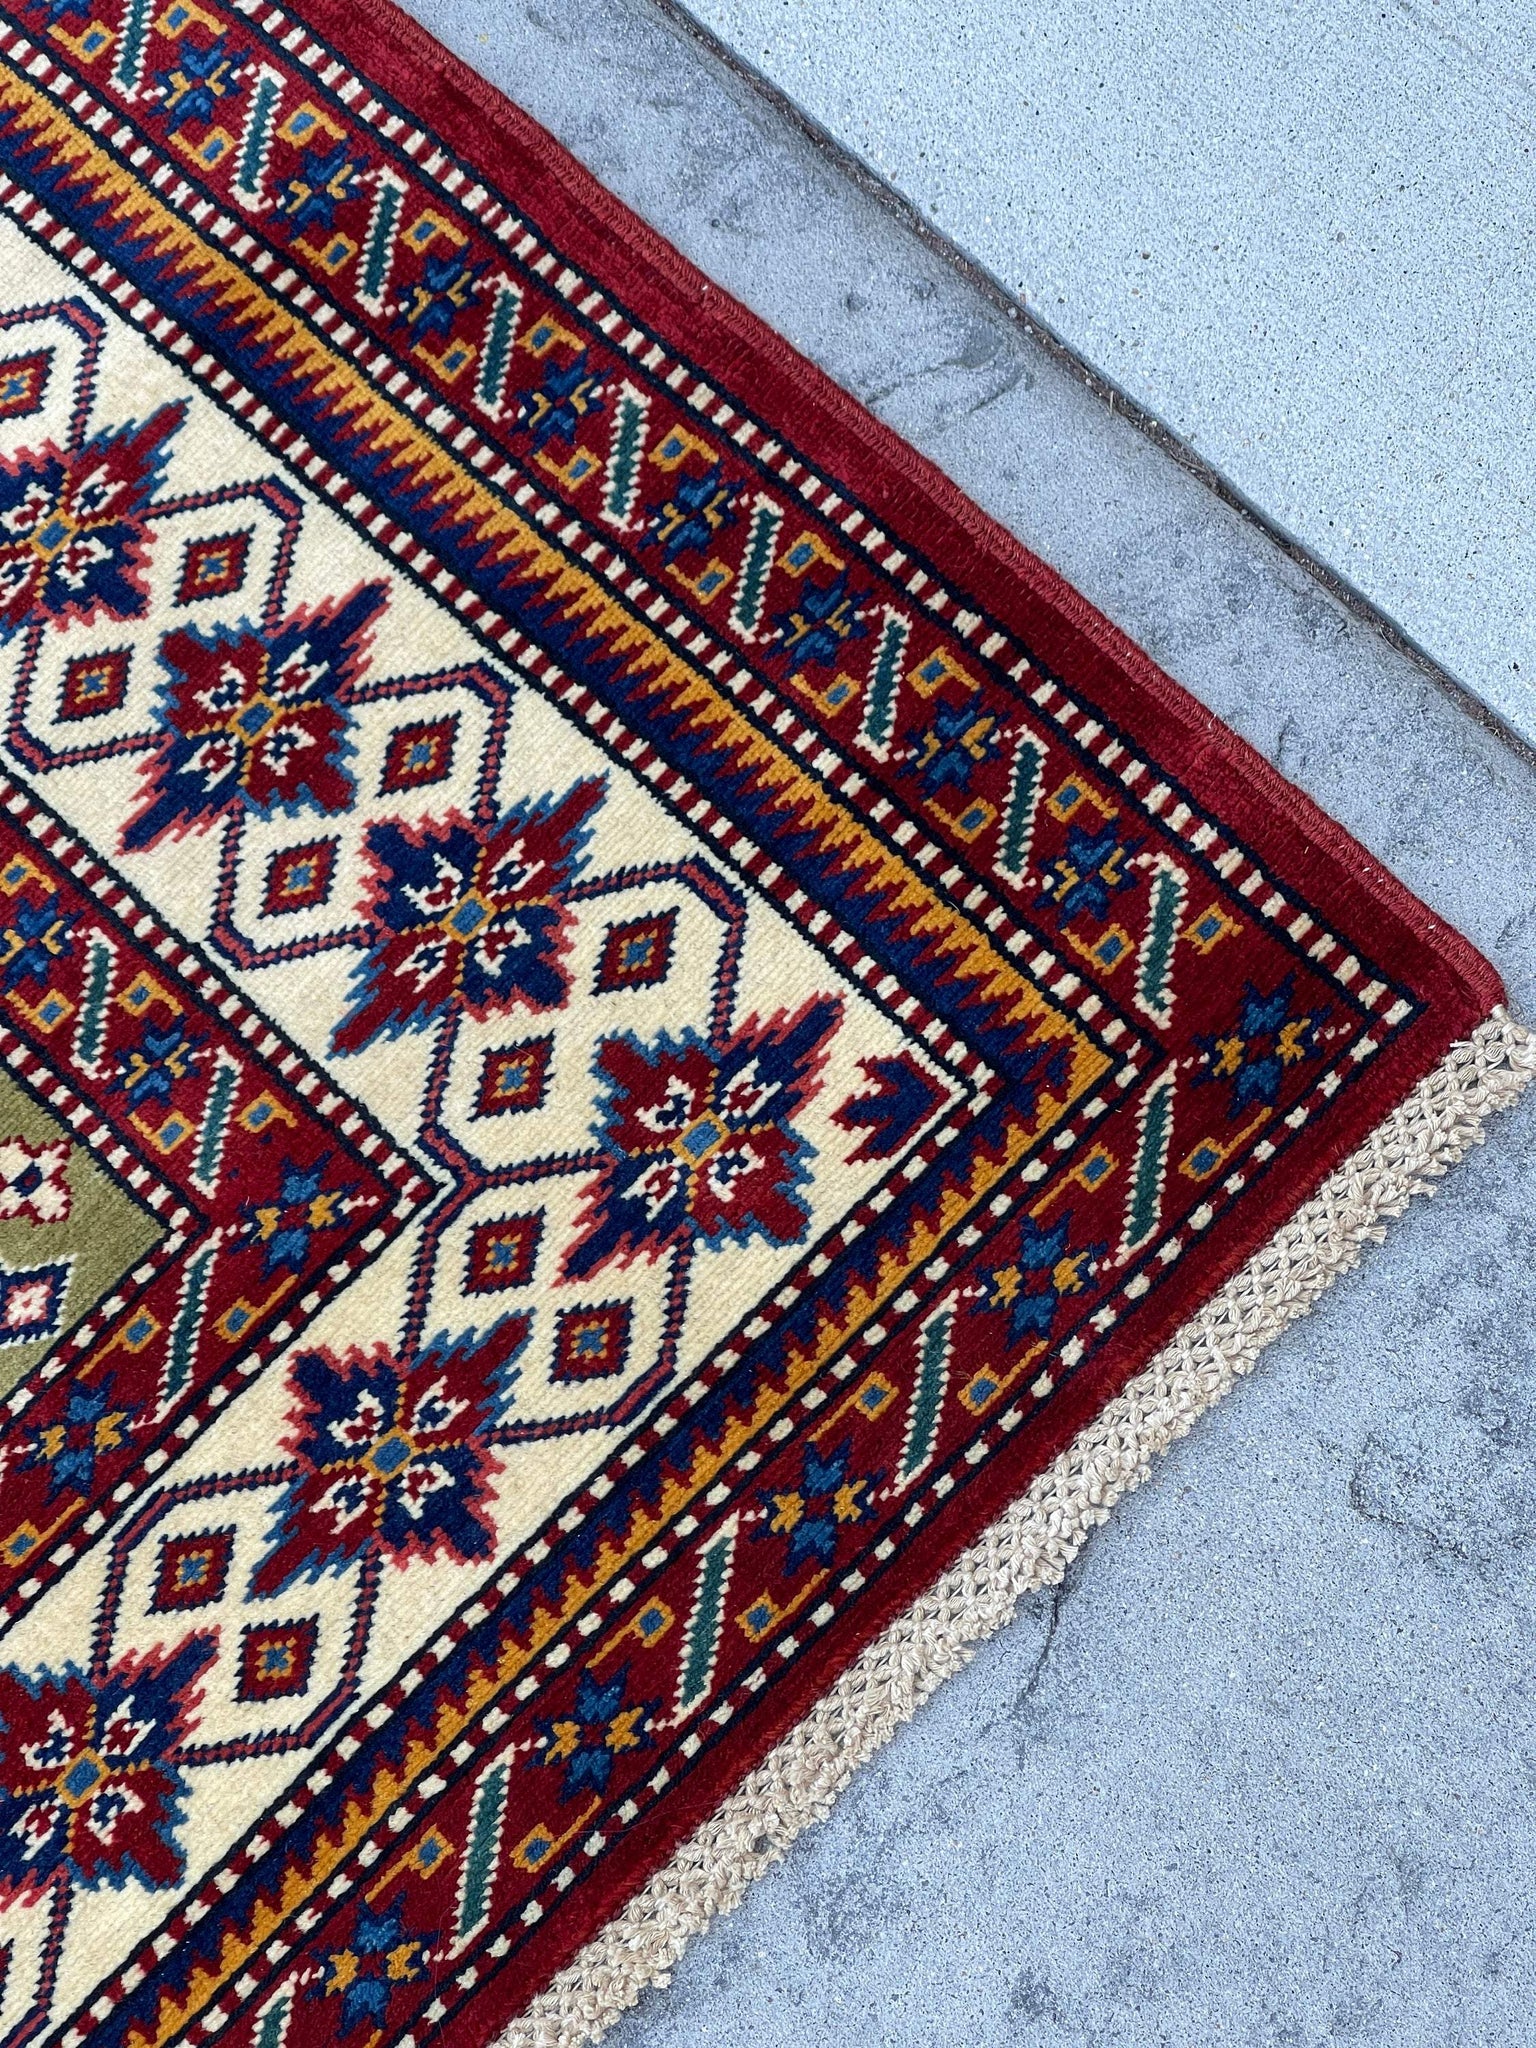 5x6 (150x180) Handmade Afghan Rug | Red Beige Green Blue | Turkish Oushak Boho Tribal Persian Oriental Bohemian Kazak Bohemian Heriz